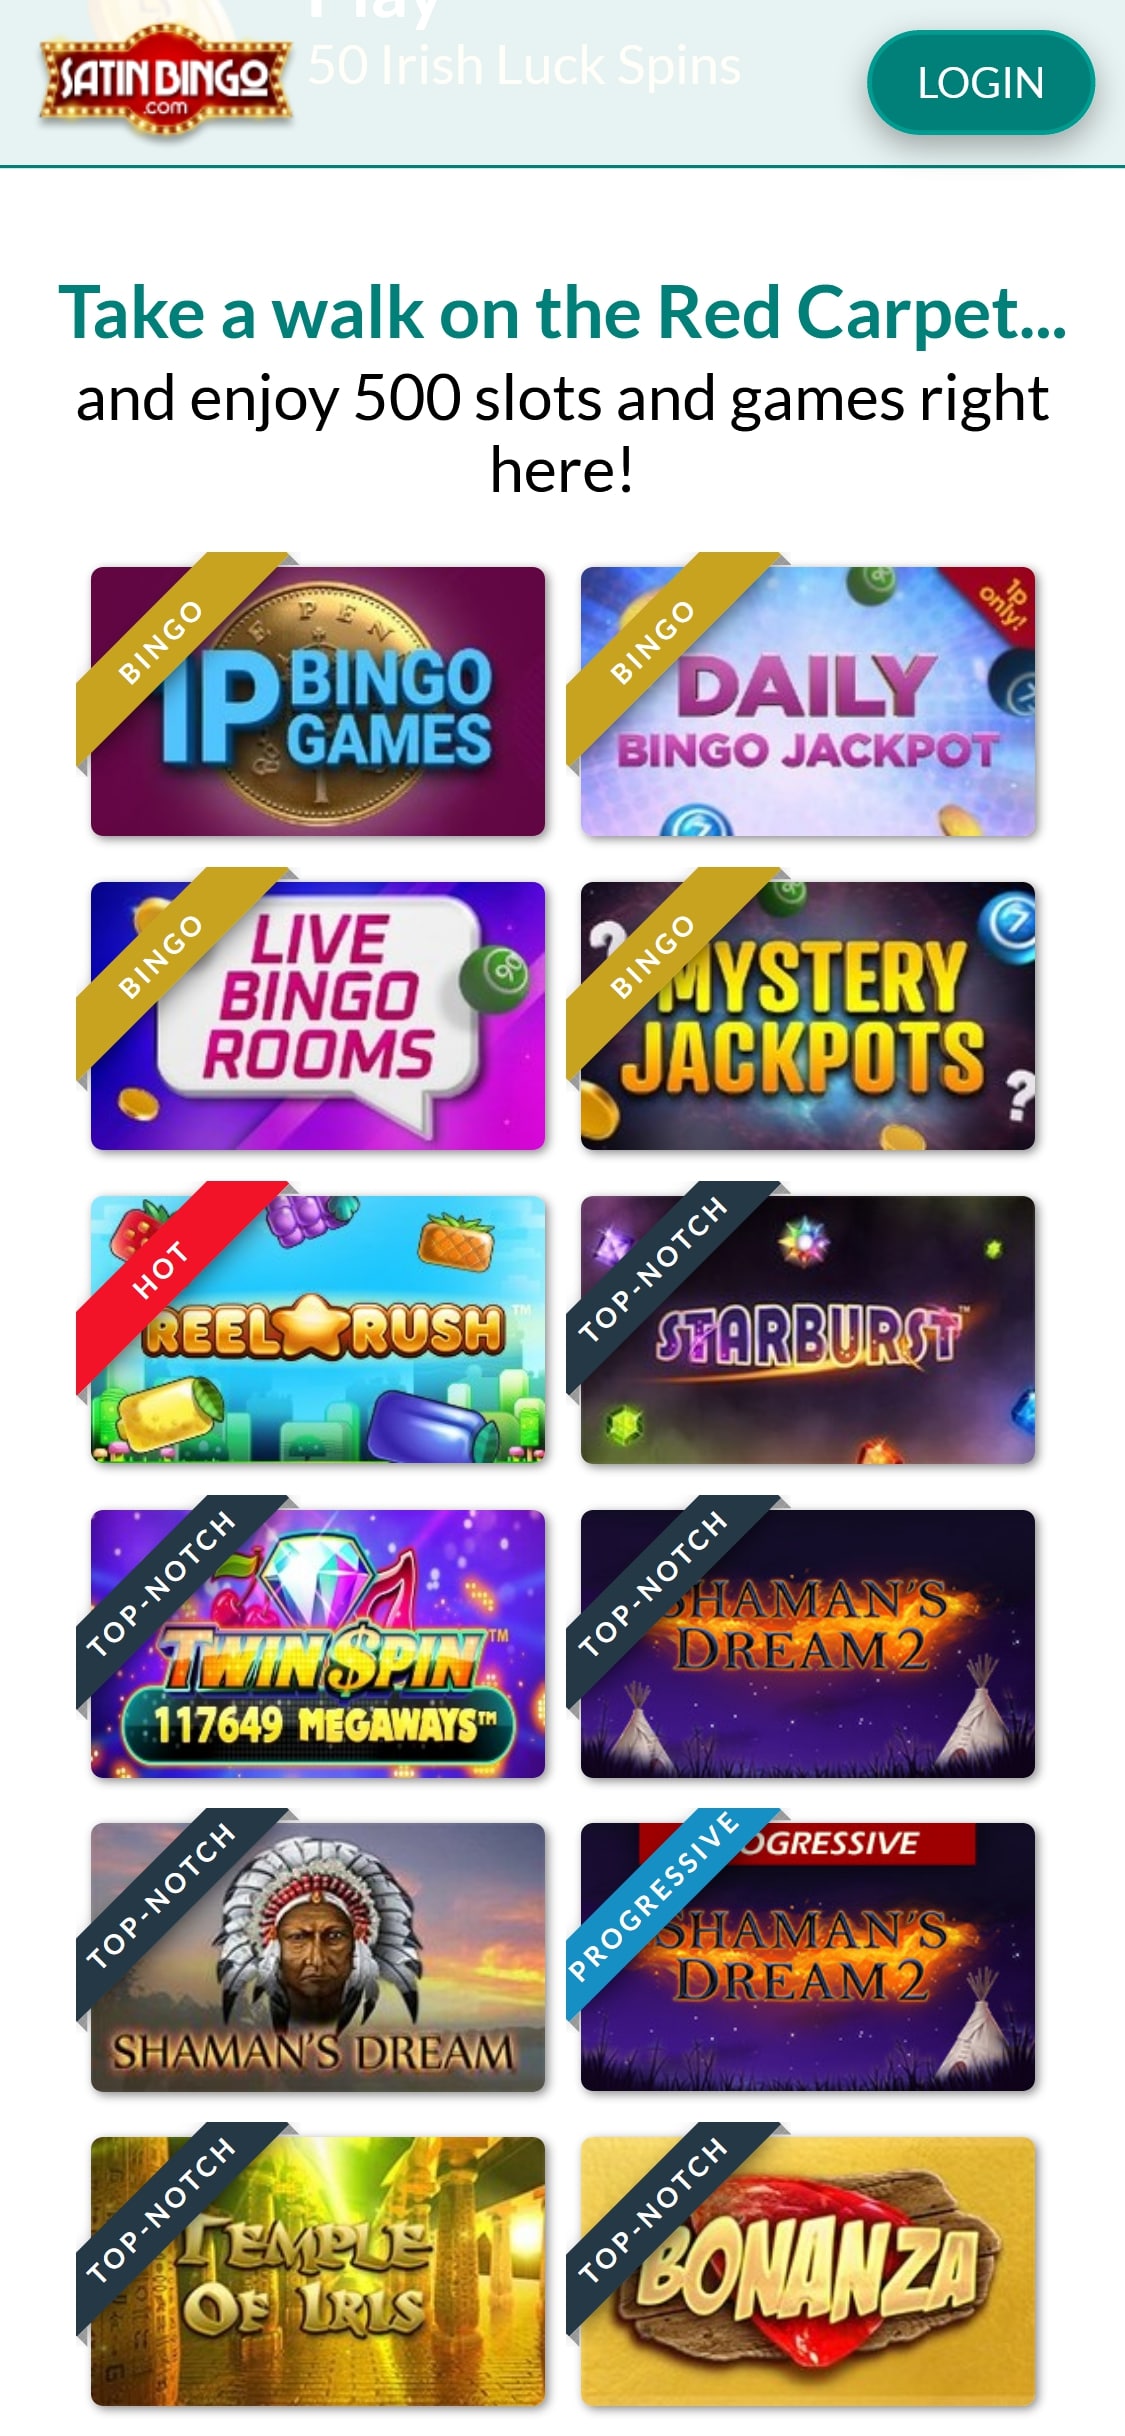 Satin Bingo Casino Mobile Games Review